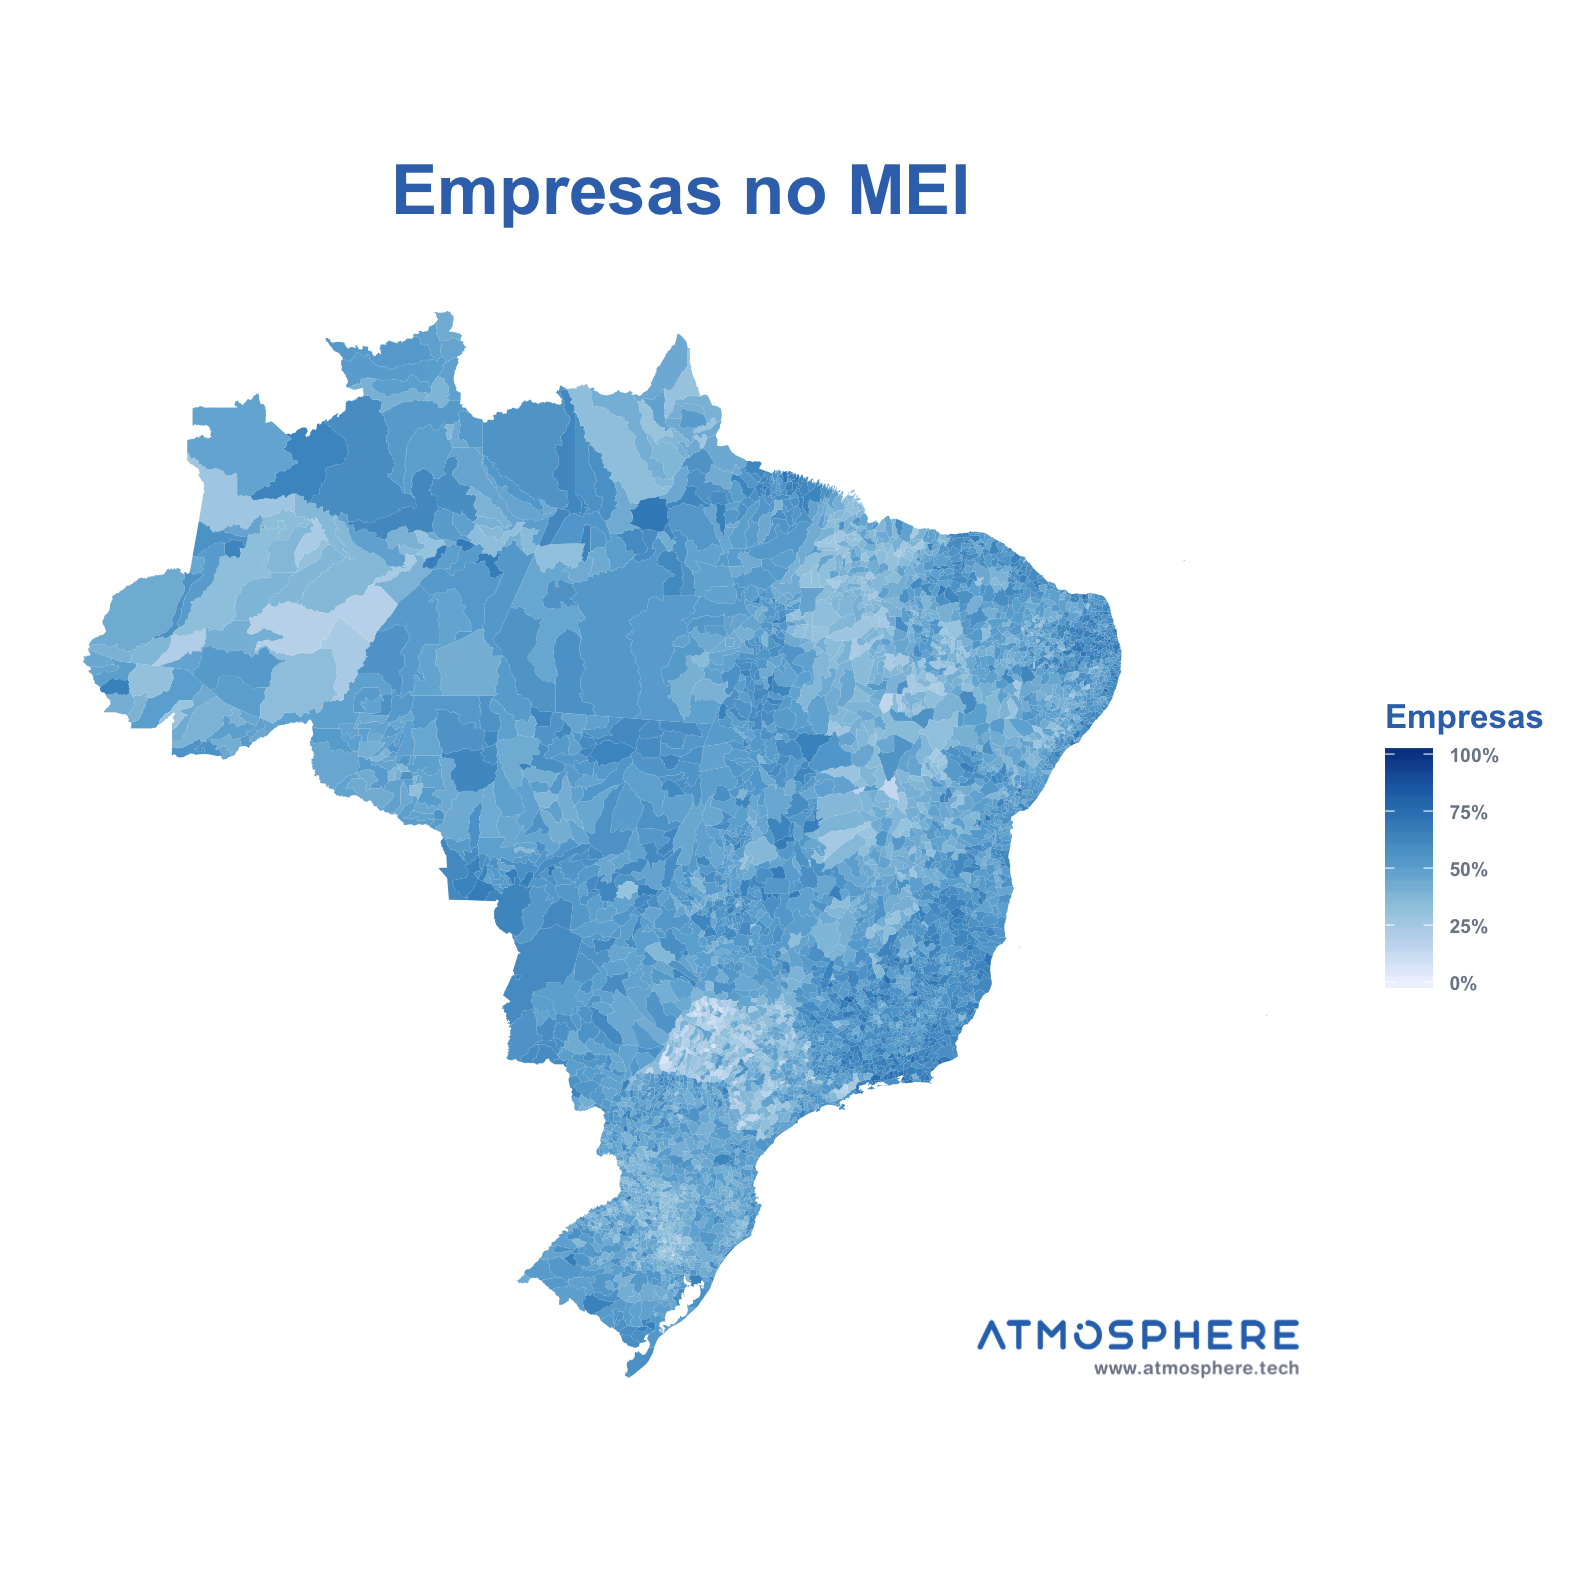 Atmosphere Percentual de Empresas no MEI por Município no Brasil